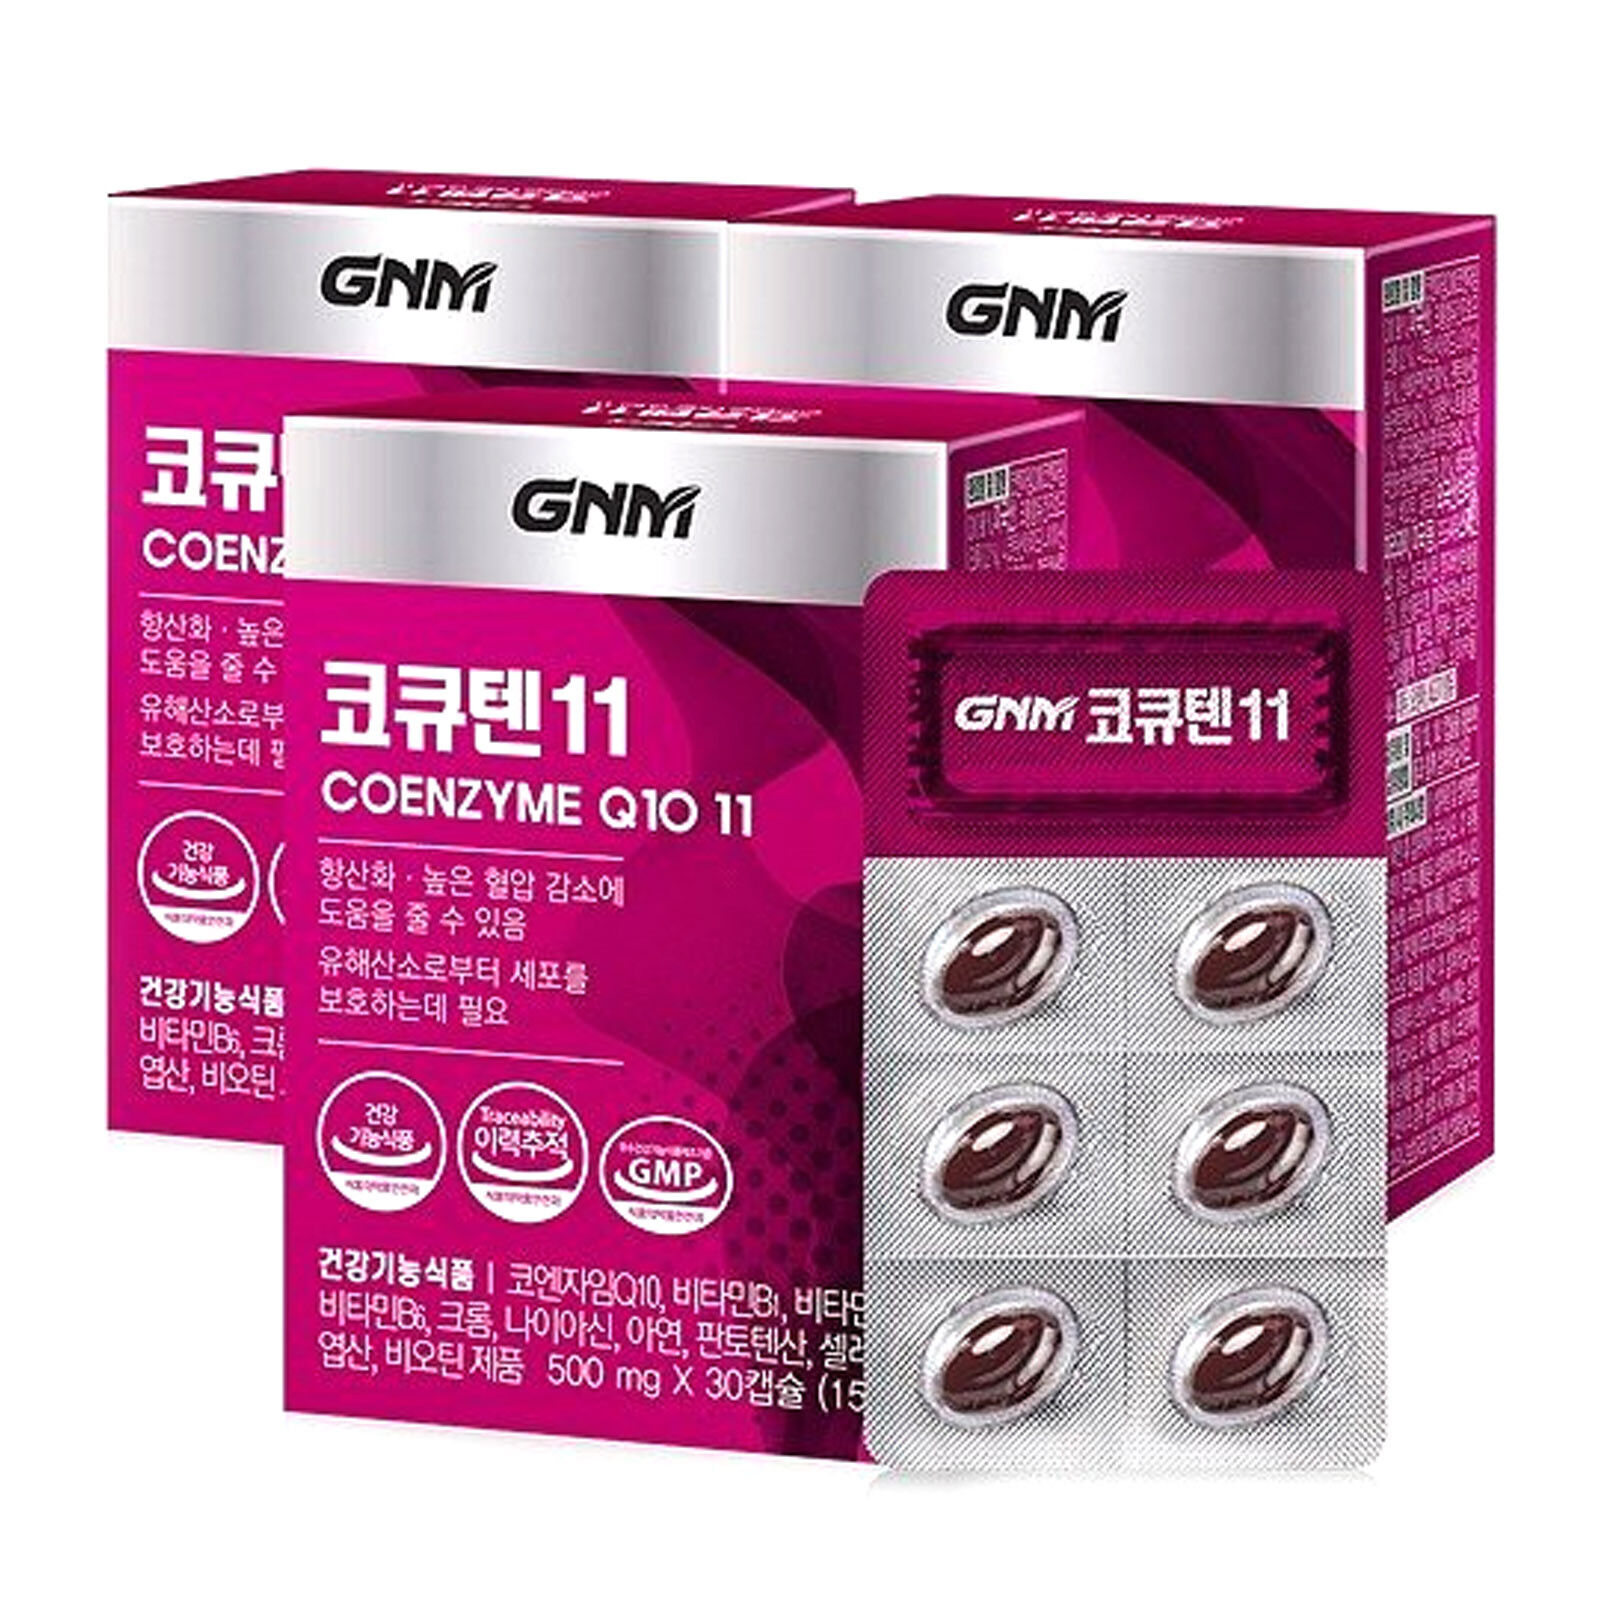 Poging Cyclopen Citaat GNM Natural COENZYME Q10 -11 Health Food Pills 90 Capsules Vitamin Blood  Sugar 8809049539289 | eBay